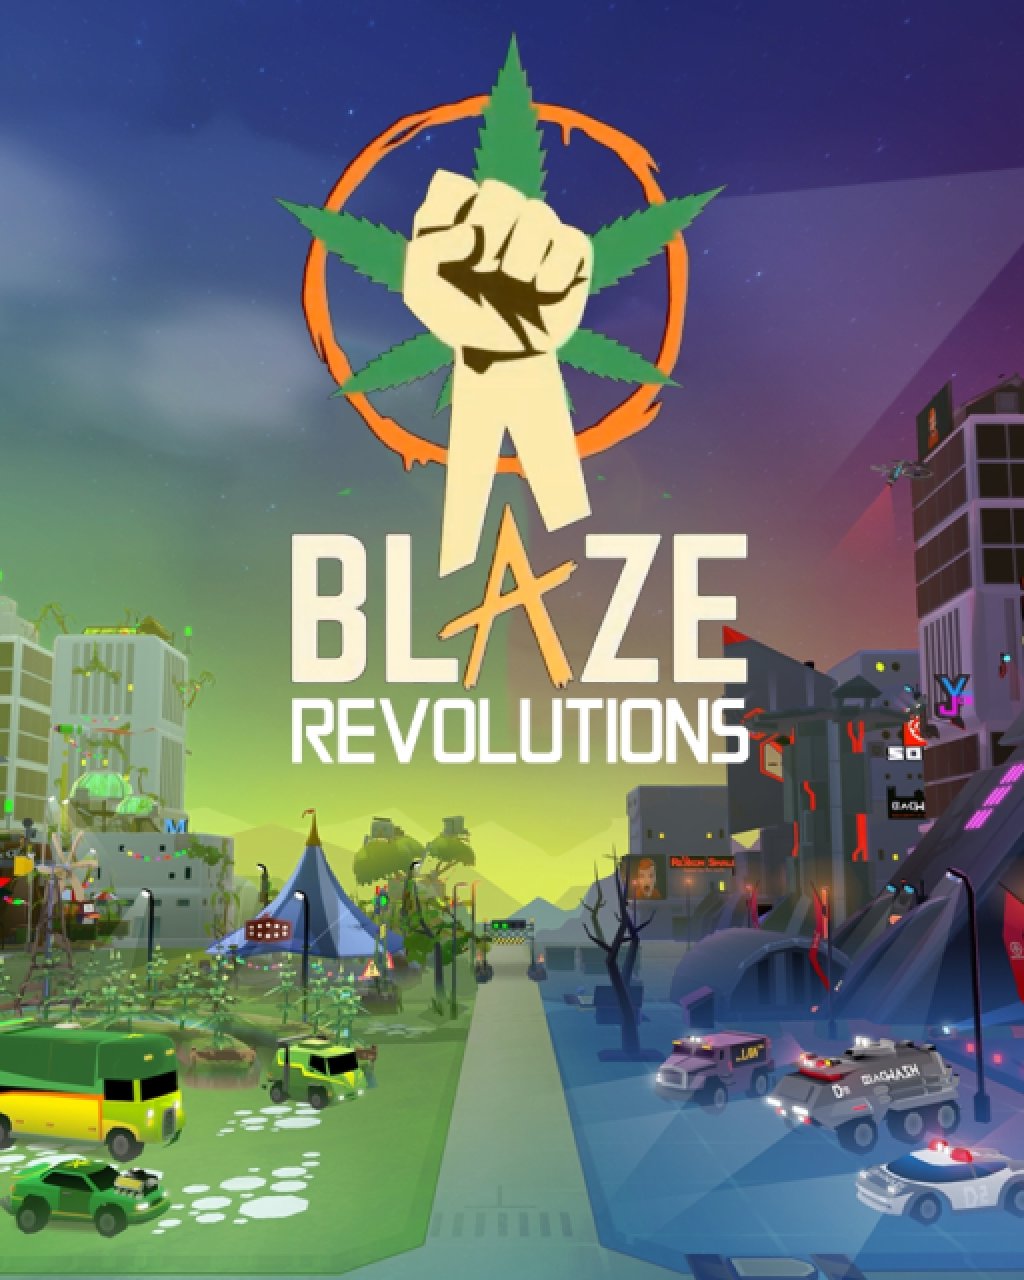 ESD Blaze Revolutions